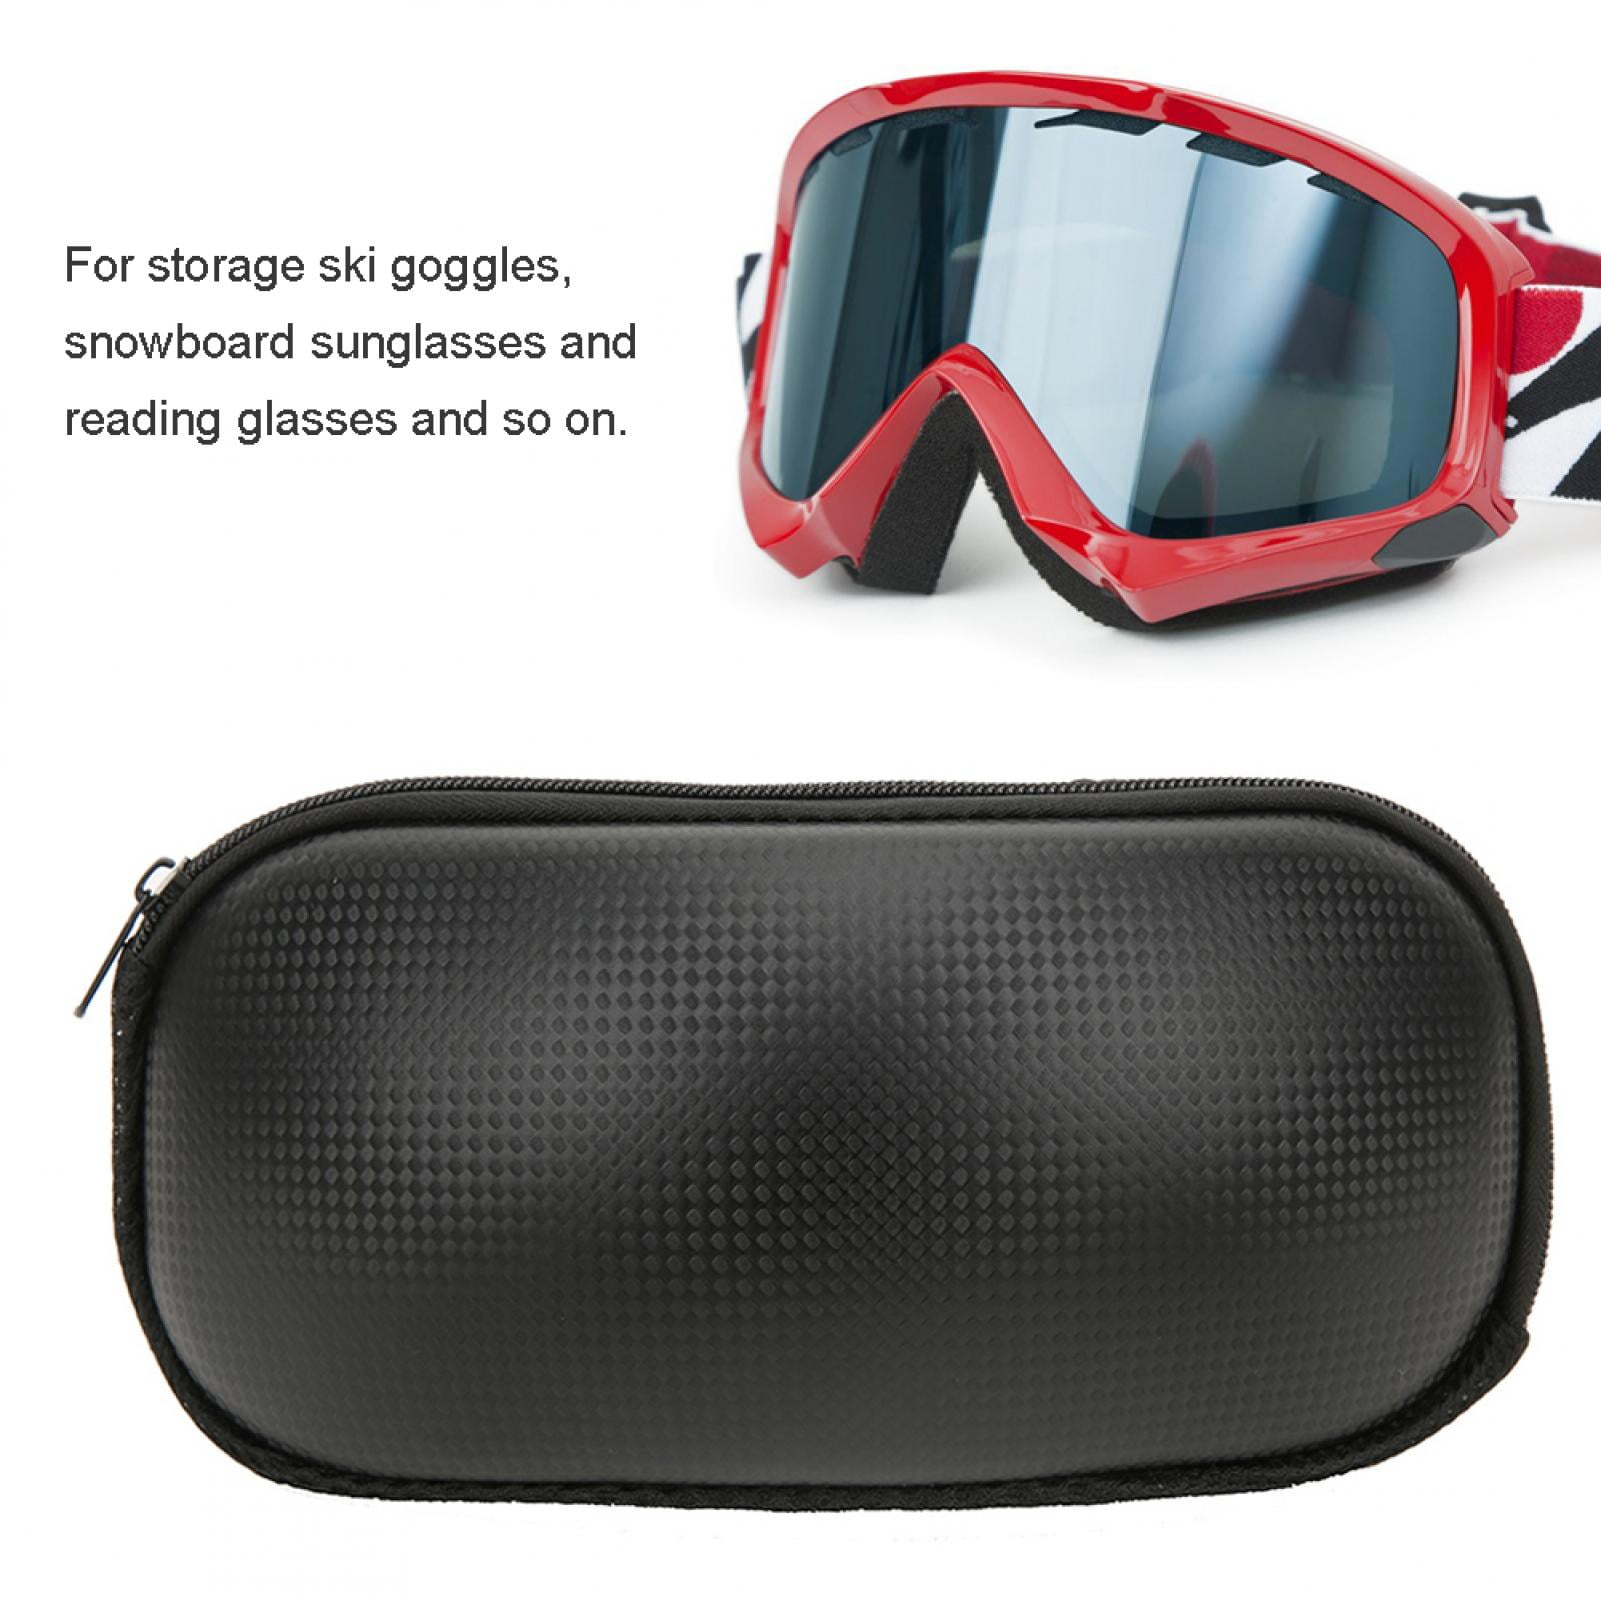 ekqw015l Fashion Ski Goggles Case EVA Skiing Eyewear Case Snowboard Goggles Sunglasses Zipper Hard Box Holder Suitable for Snowboard and Skiing Goggles, Sunglasses, Reading Glasses Black 